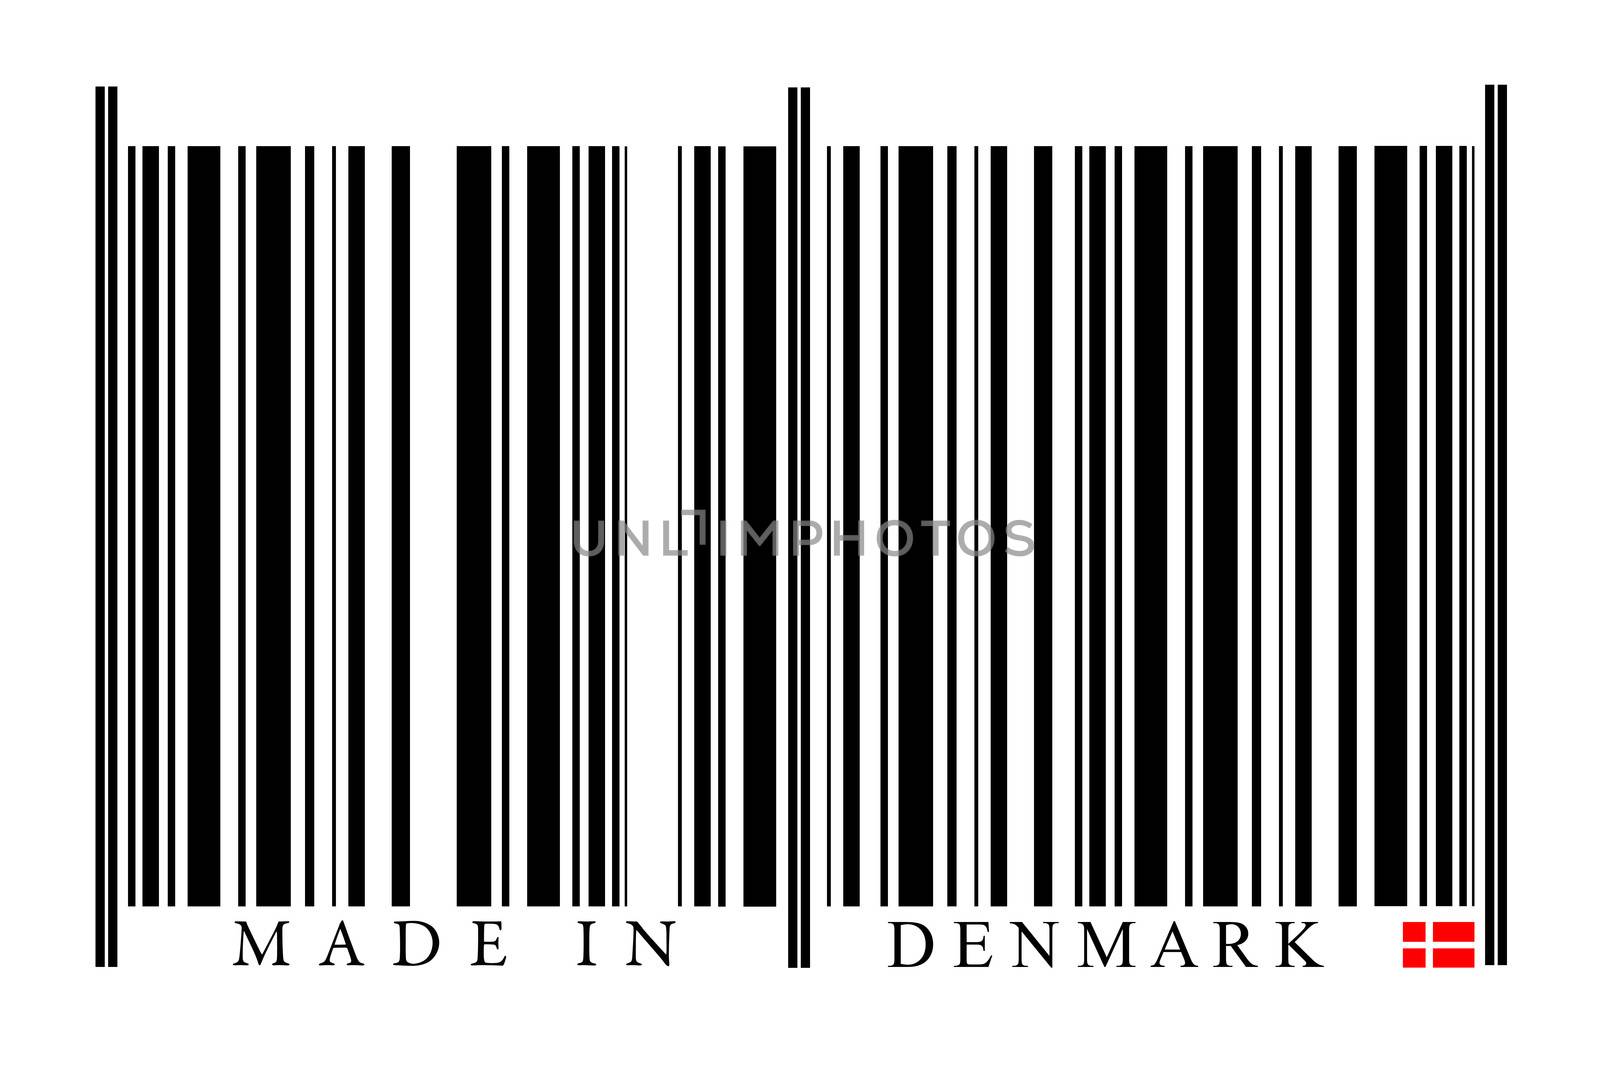 Denmark barcode on white background